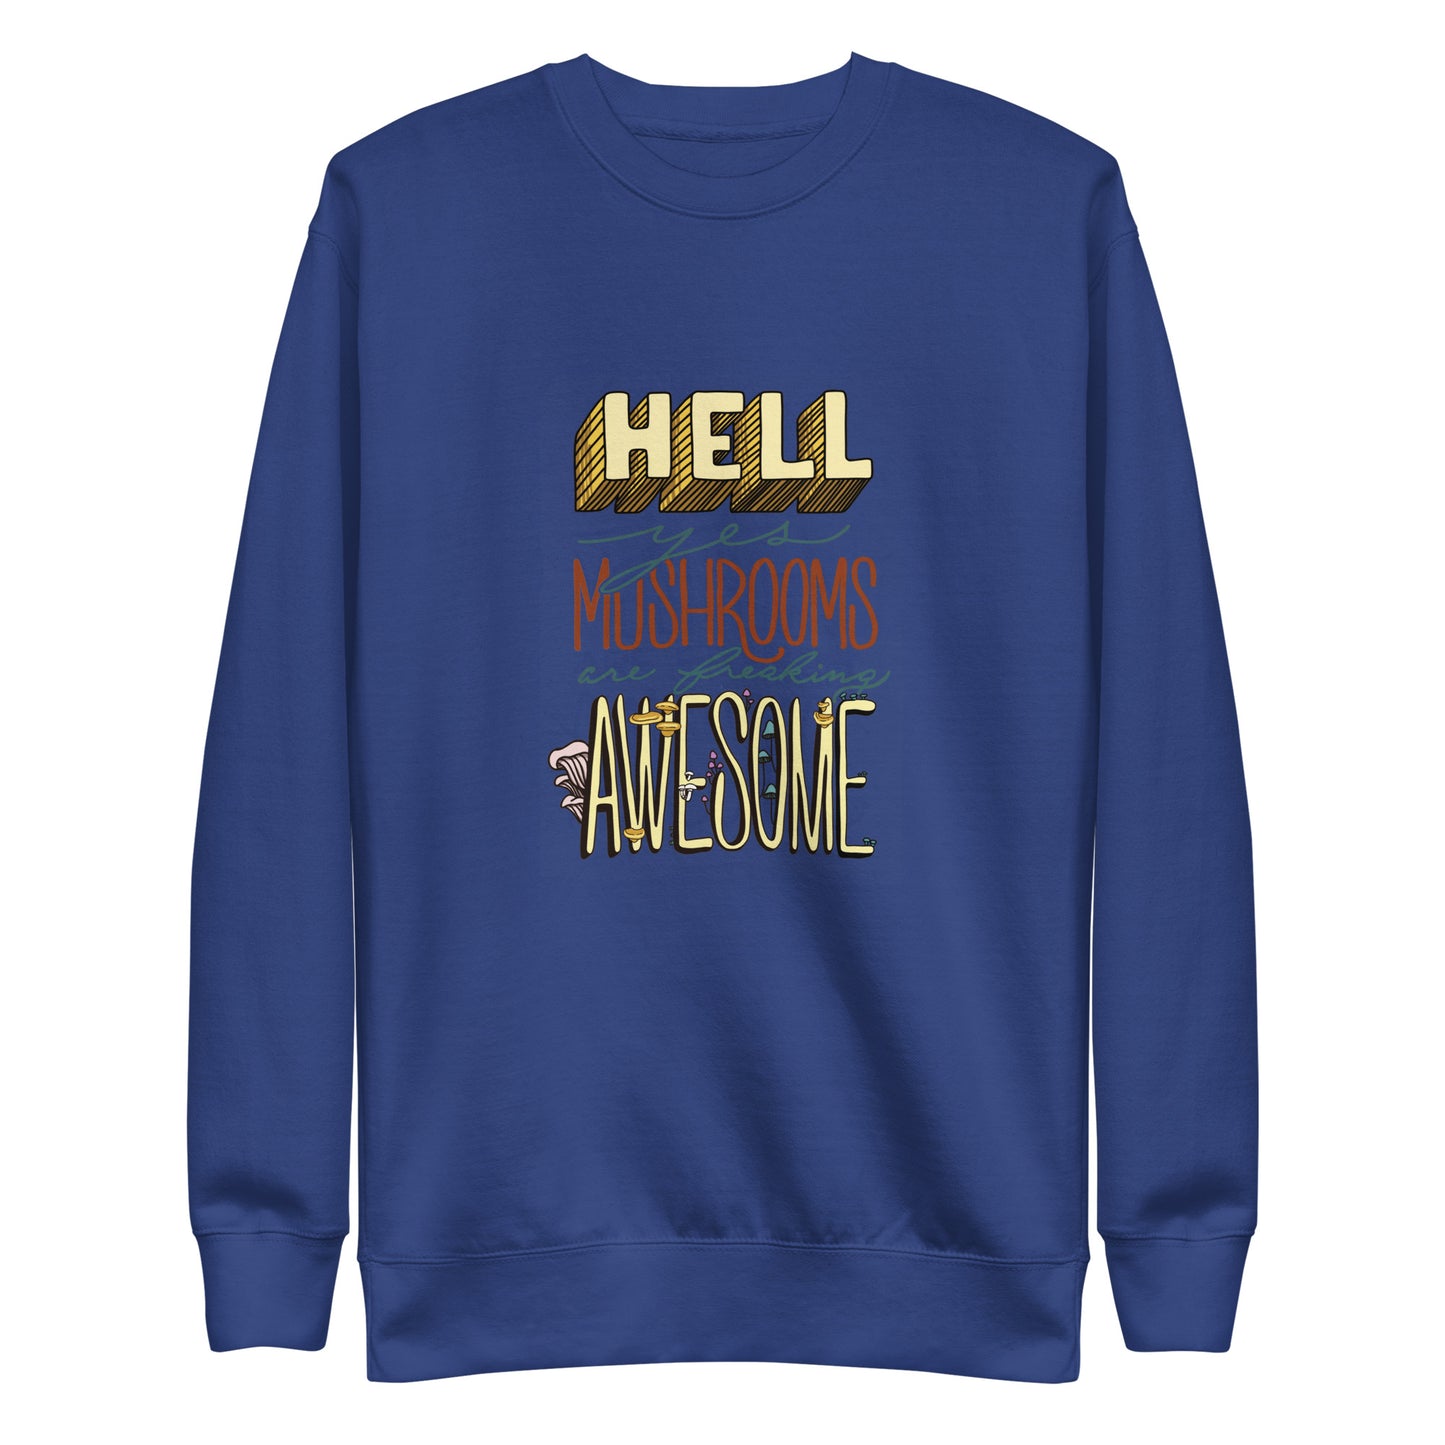 Hell Yes Mushrooms Are Freaking Awesome | Unisex Sweatshirt | Funny Mushroom Apparel